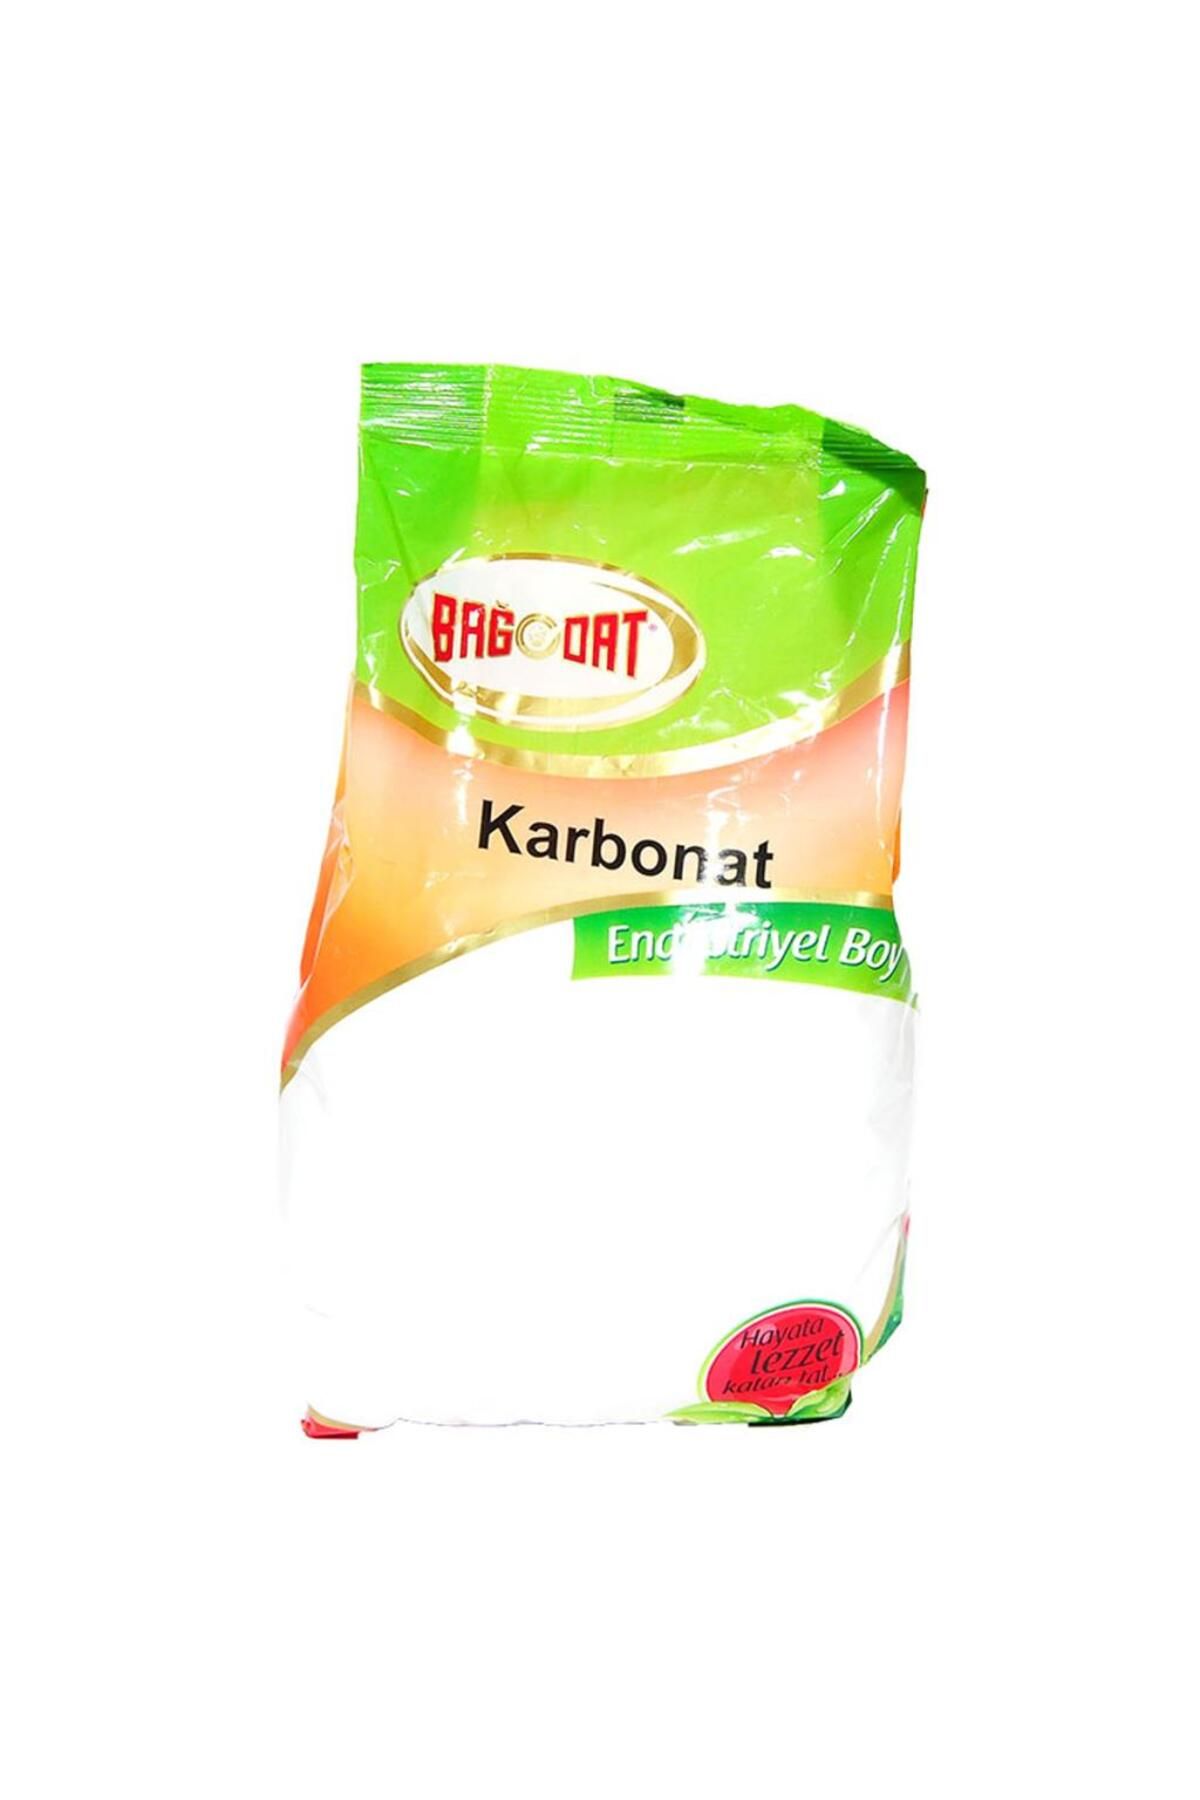 Bağdat Baharat Karbonat 1 Kg